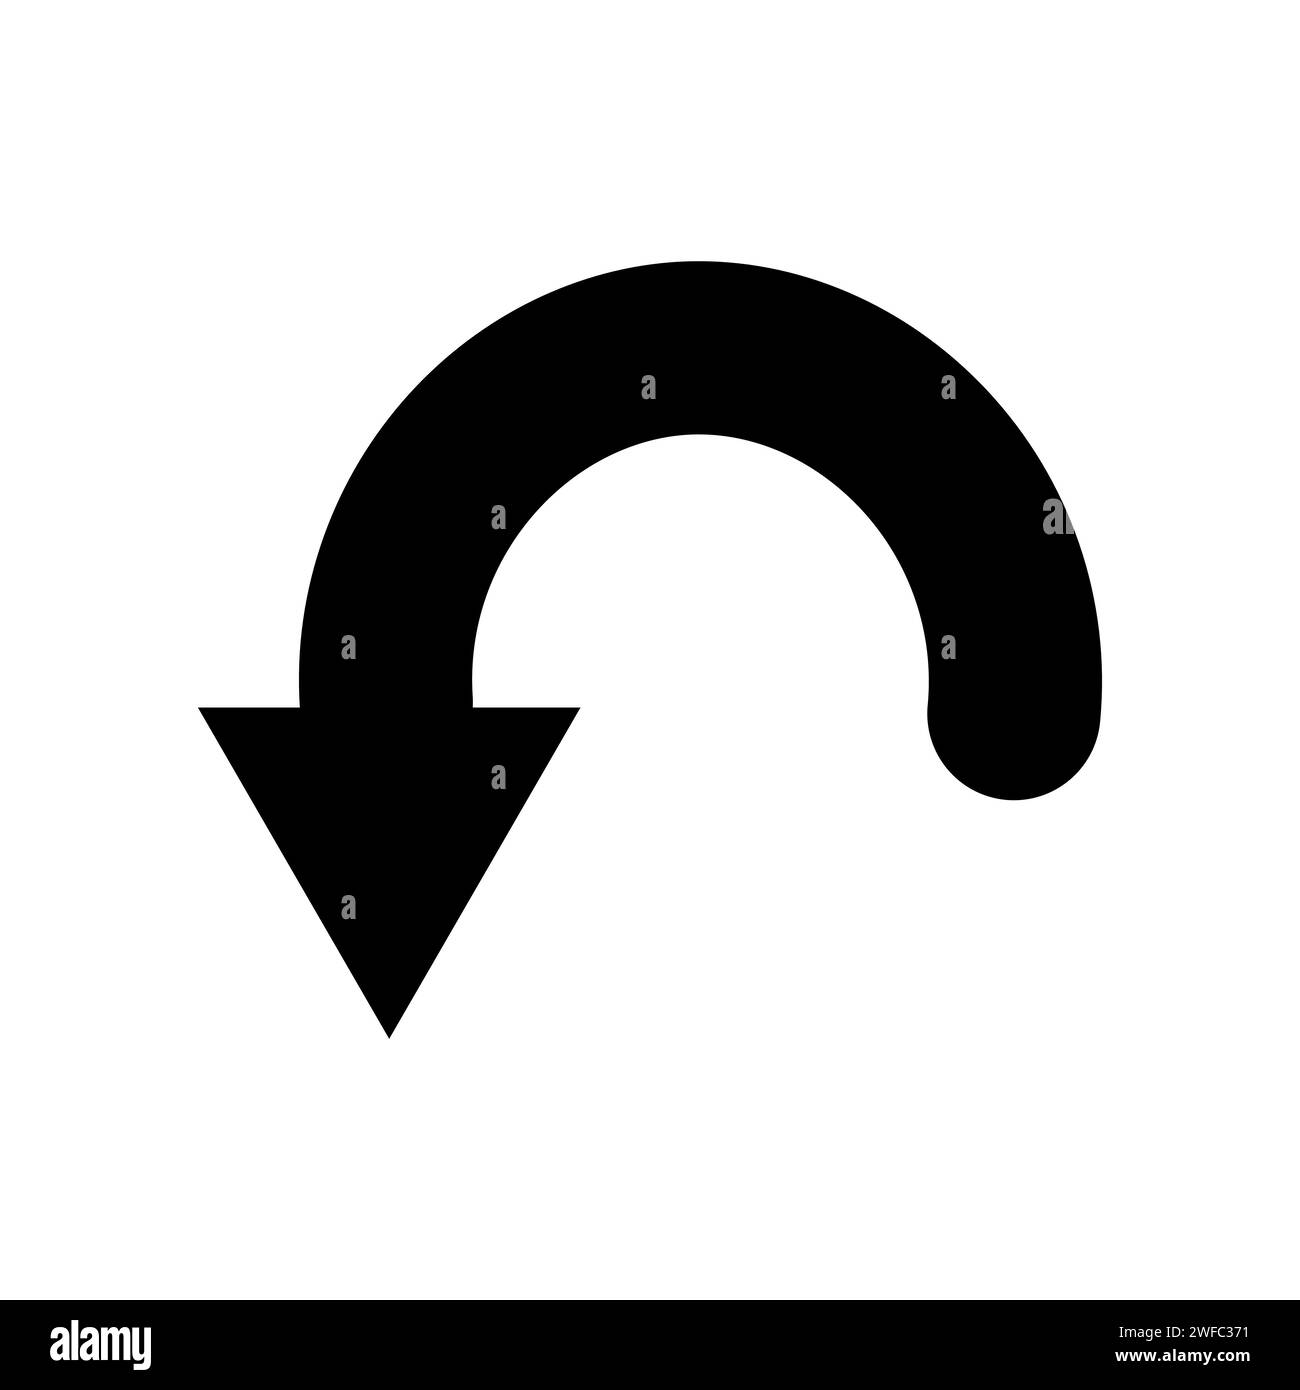 Circular left and down arrow. Navigation sign. Direction signpost. Semicircular figure. Vector illustration. Stock image. EPS 10. Stock Vector